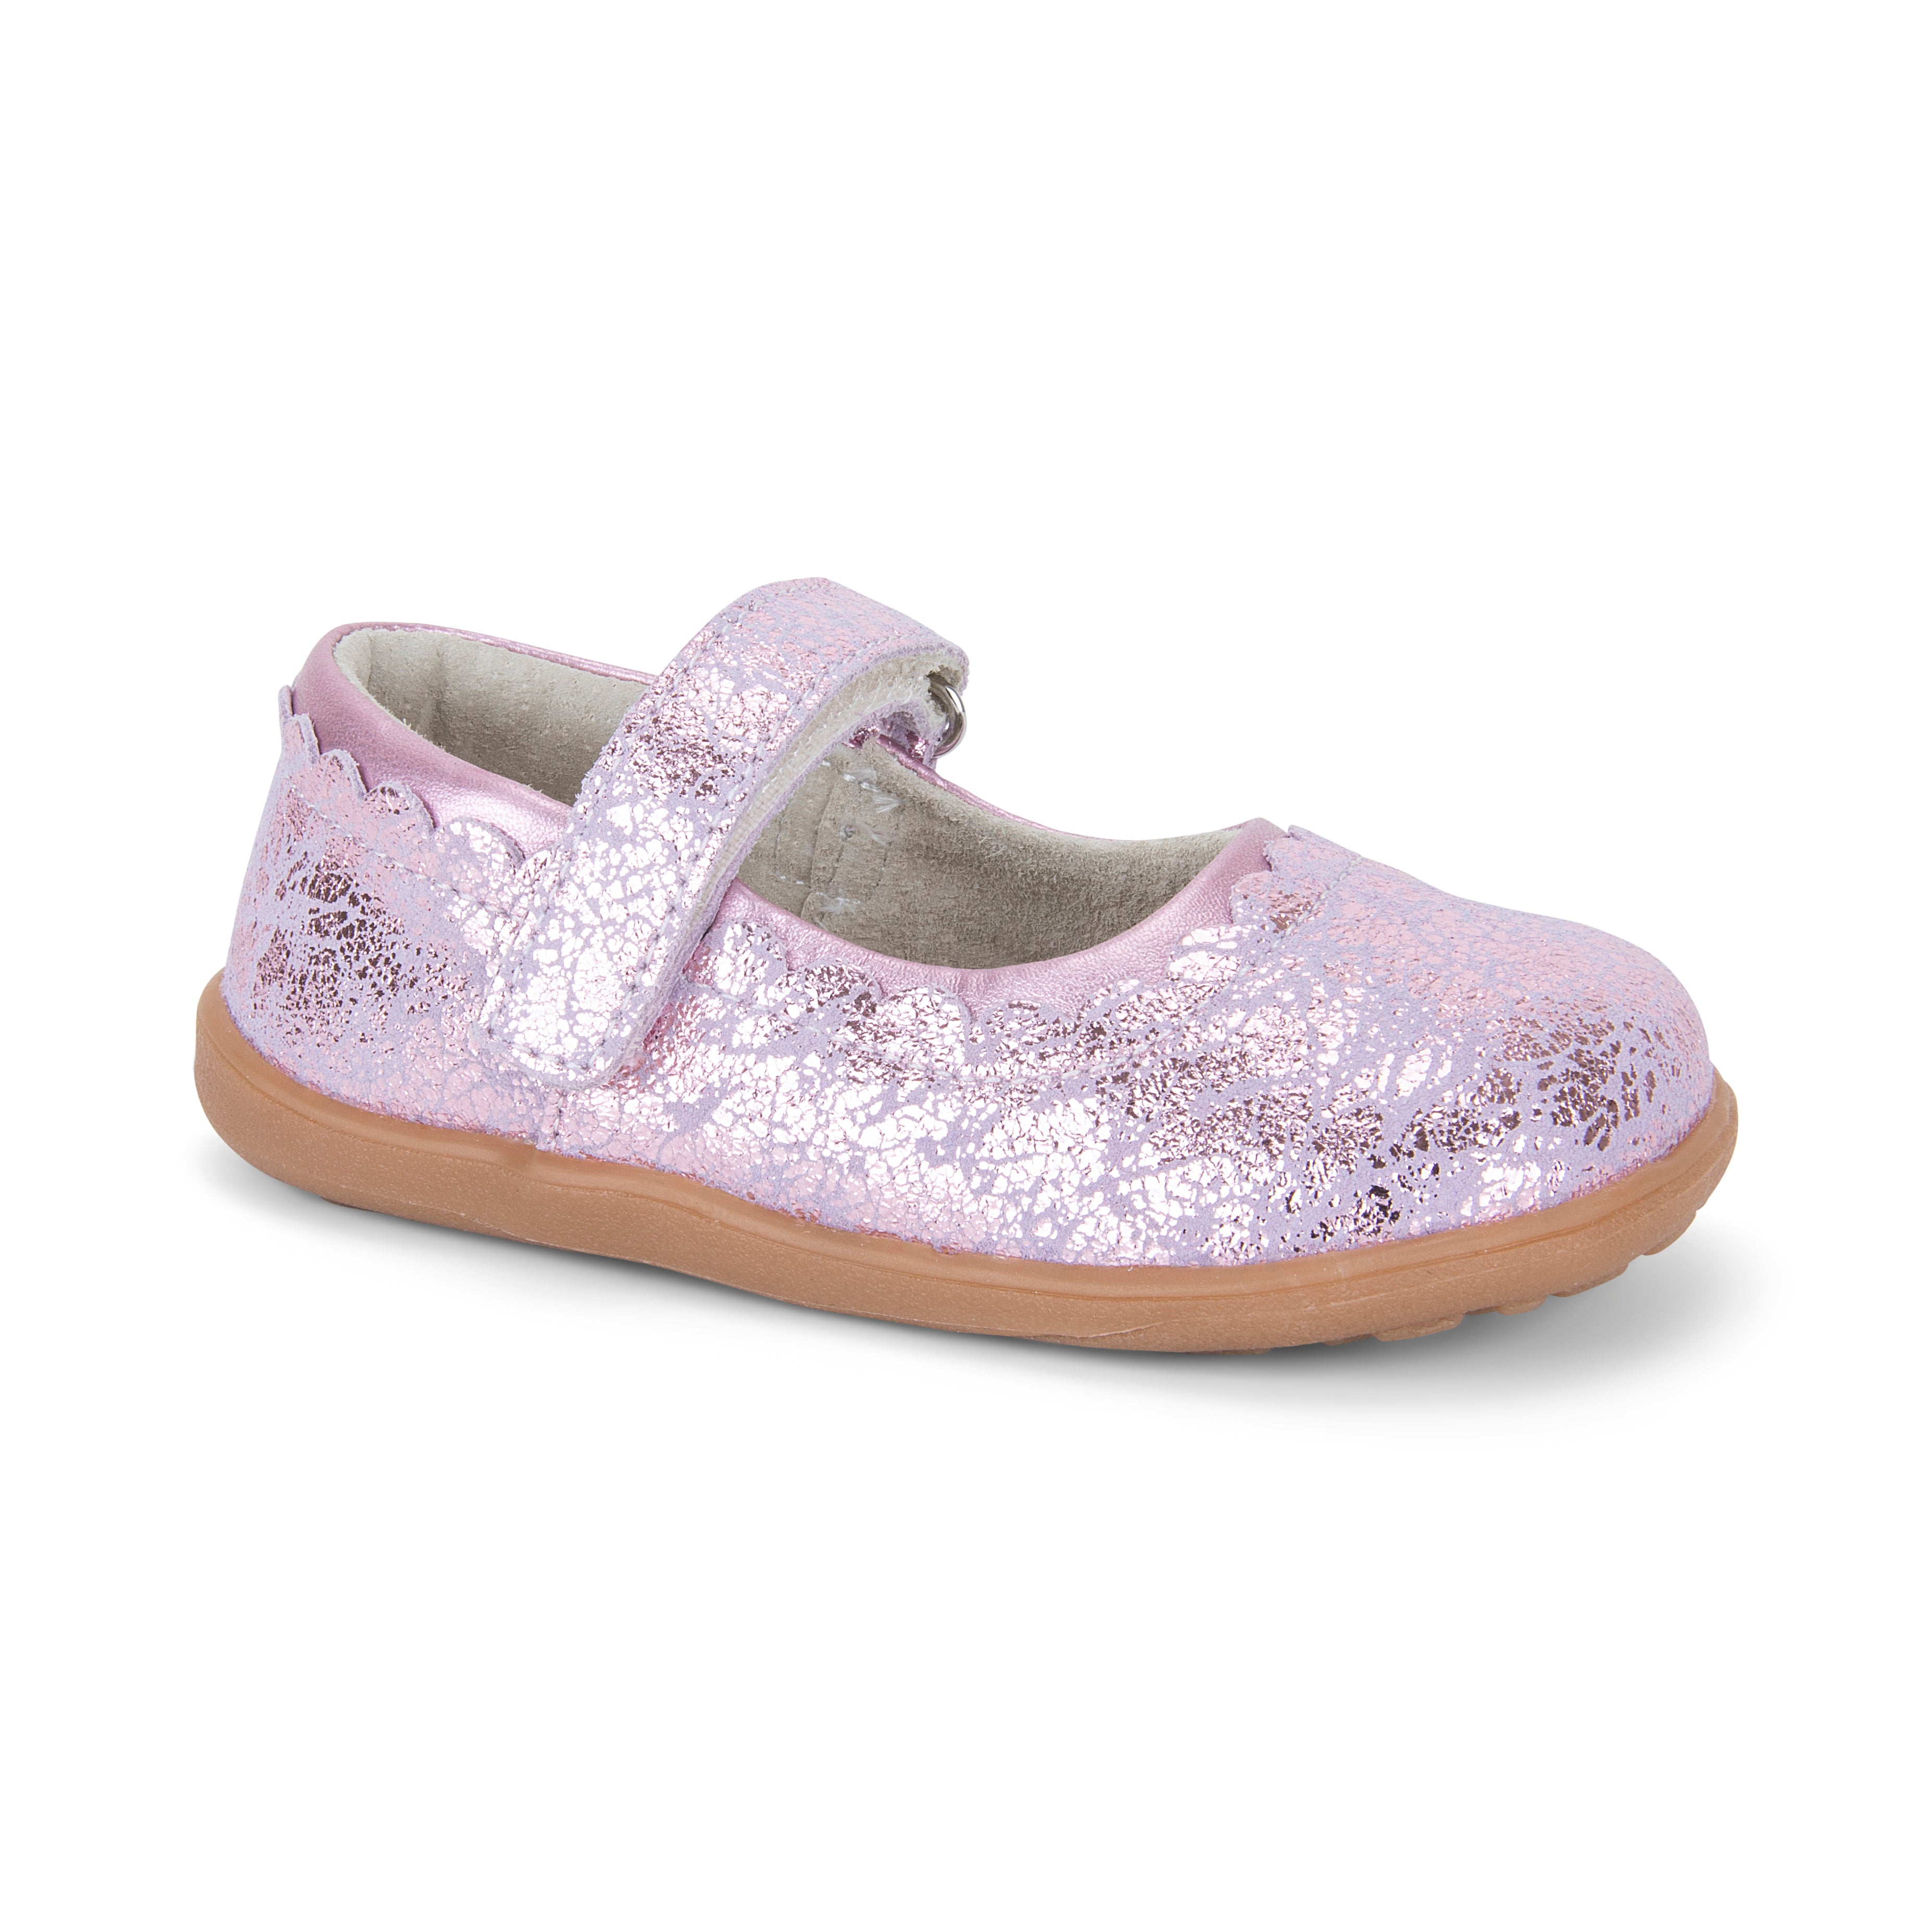 Jane II Kid's Mary Jane Dress Shoe - Pink Metallic